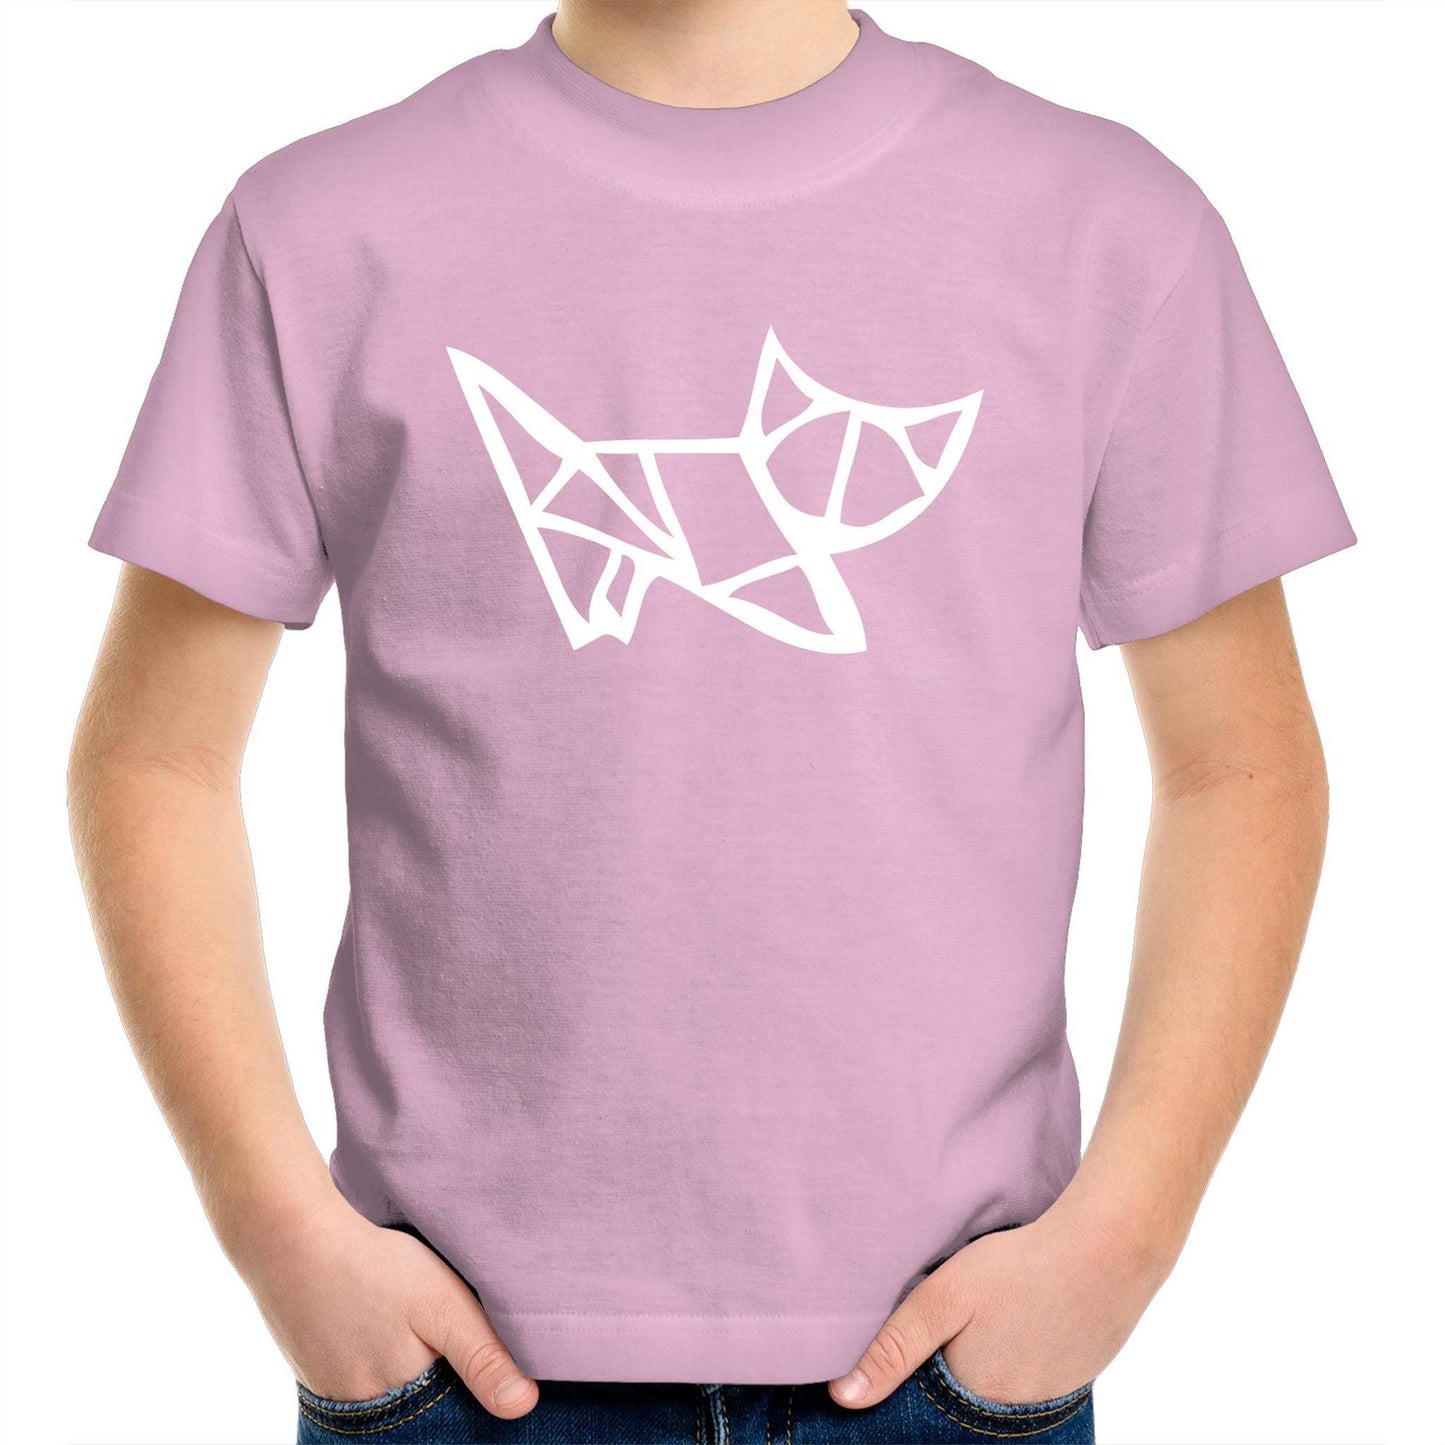 Origami Kitten - Kids Youth Crew T-Shirt Pink Kids Youth T-shirt animal